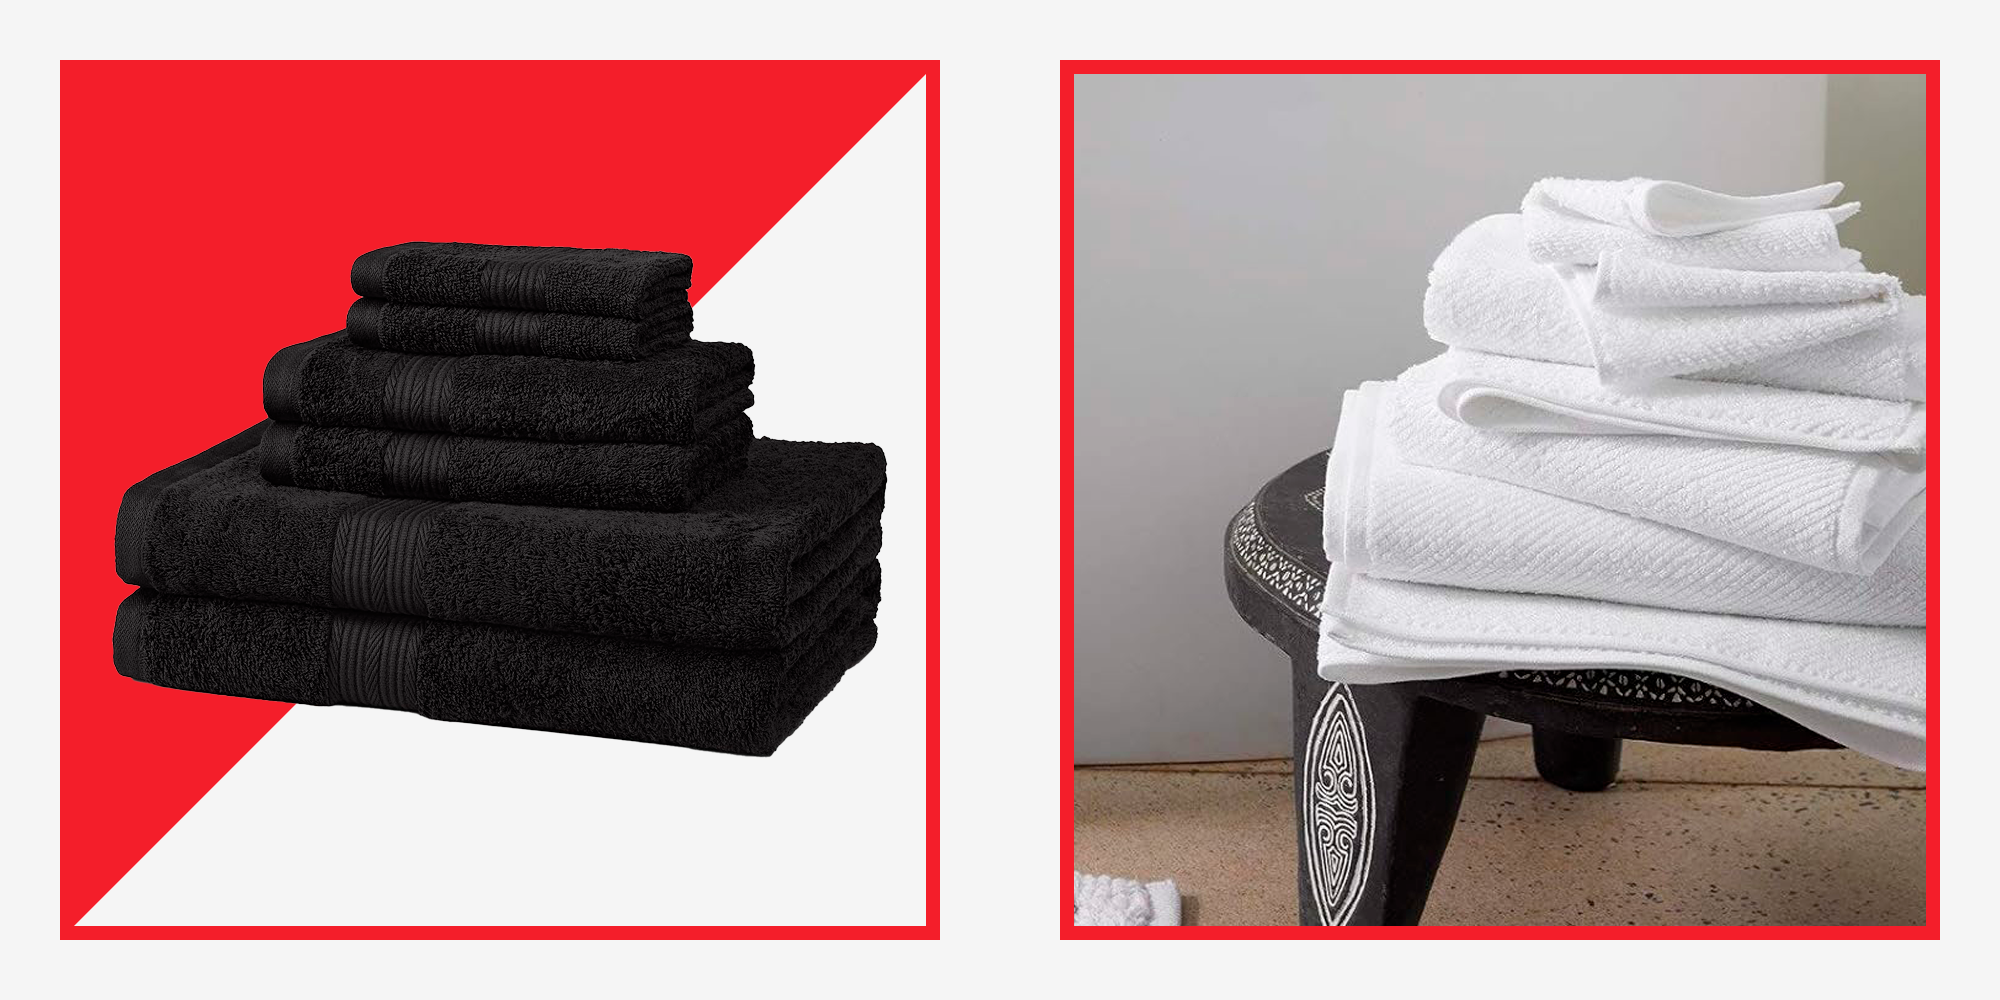 4Packs Bath Towel Sets 100% Cotton Extra Plush & Absorbent Bath Towels 54x27